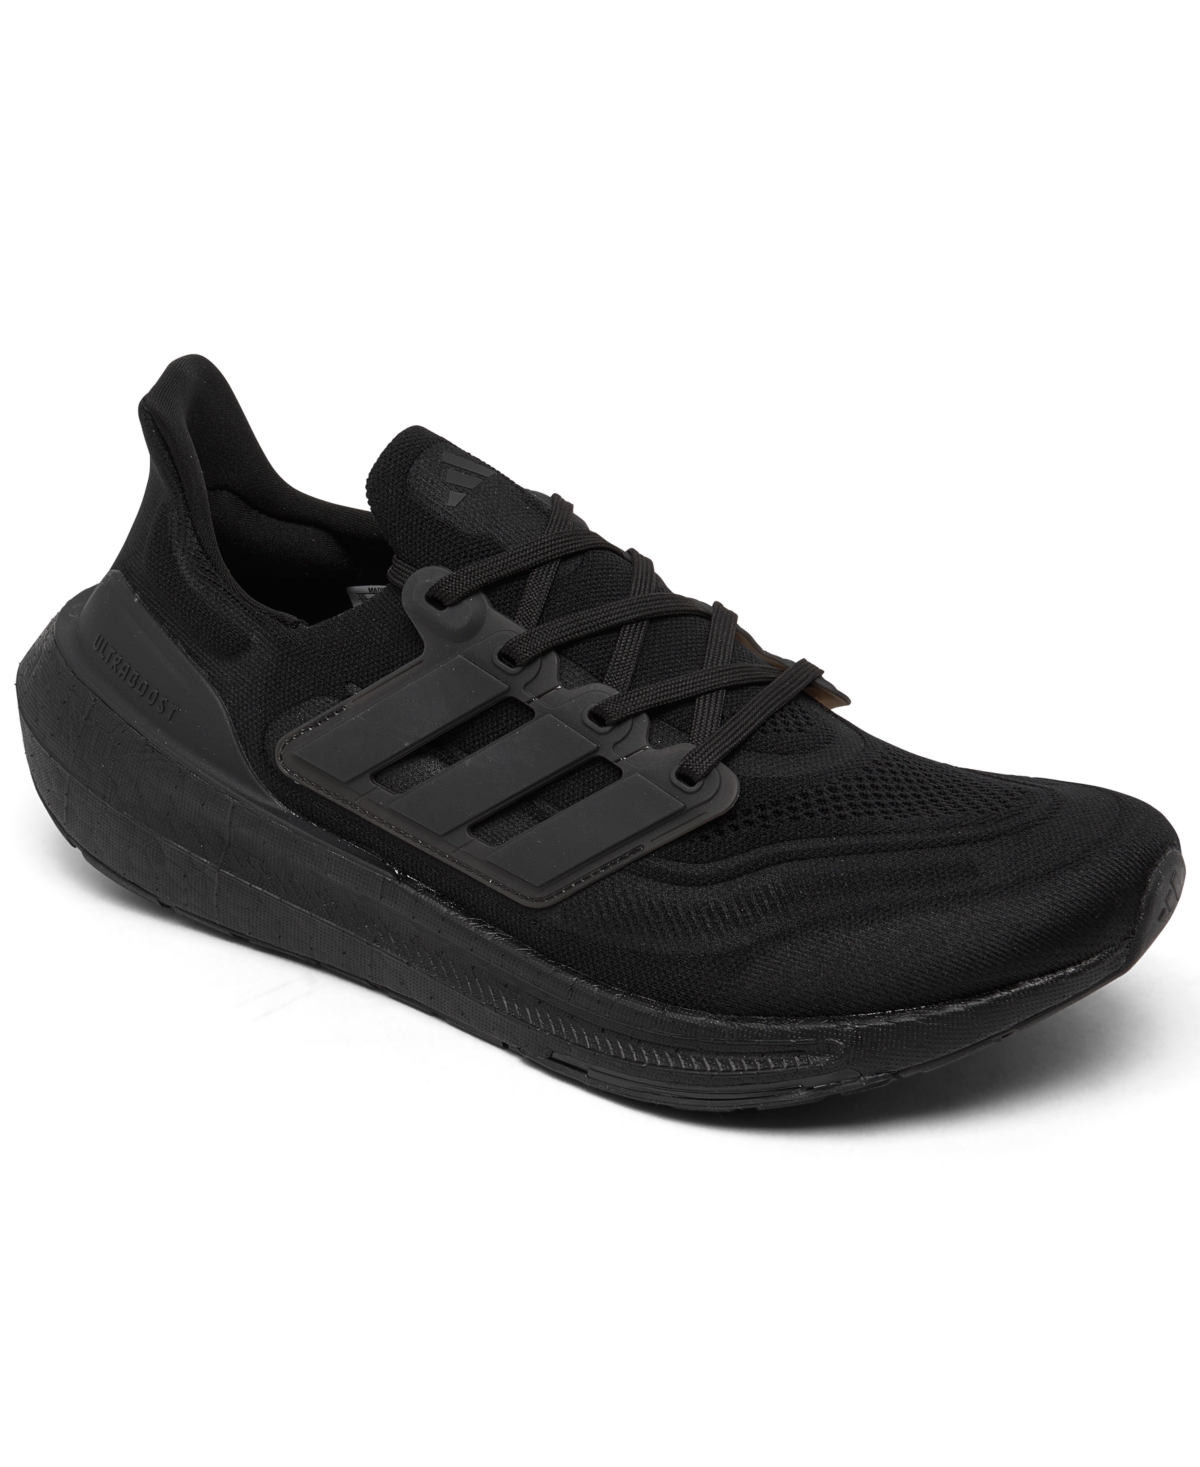 Adidas Originals Men's Ultraboost Light Running Sneakers From Finish Line In Black